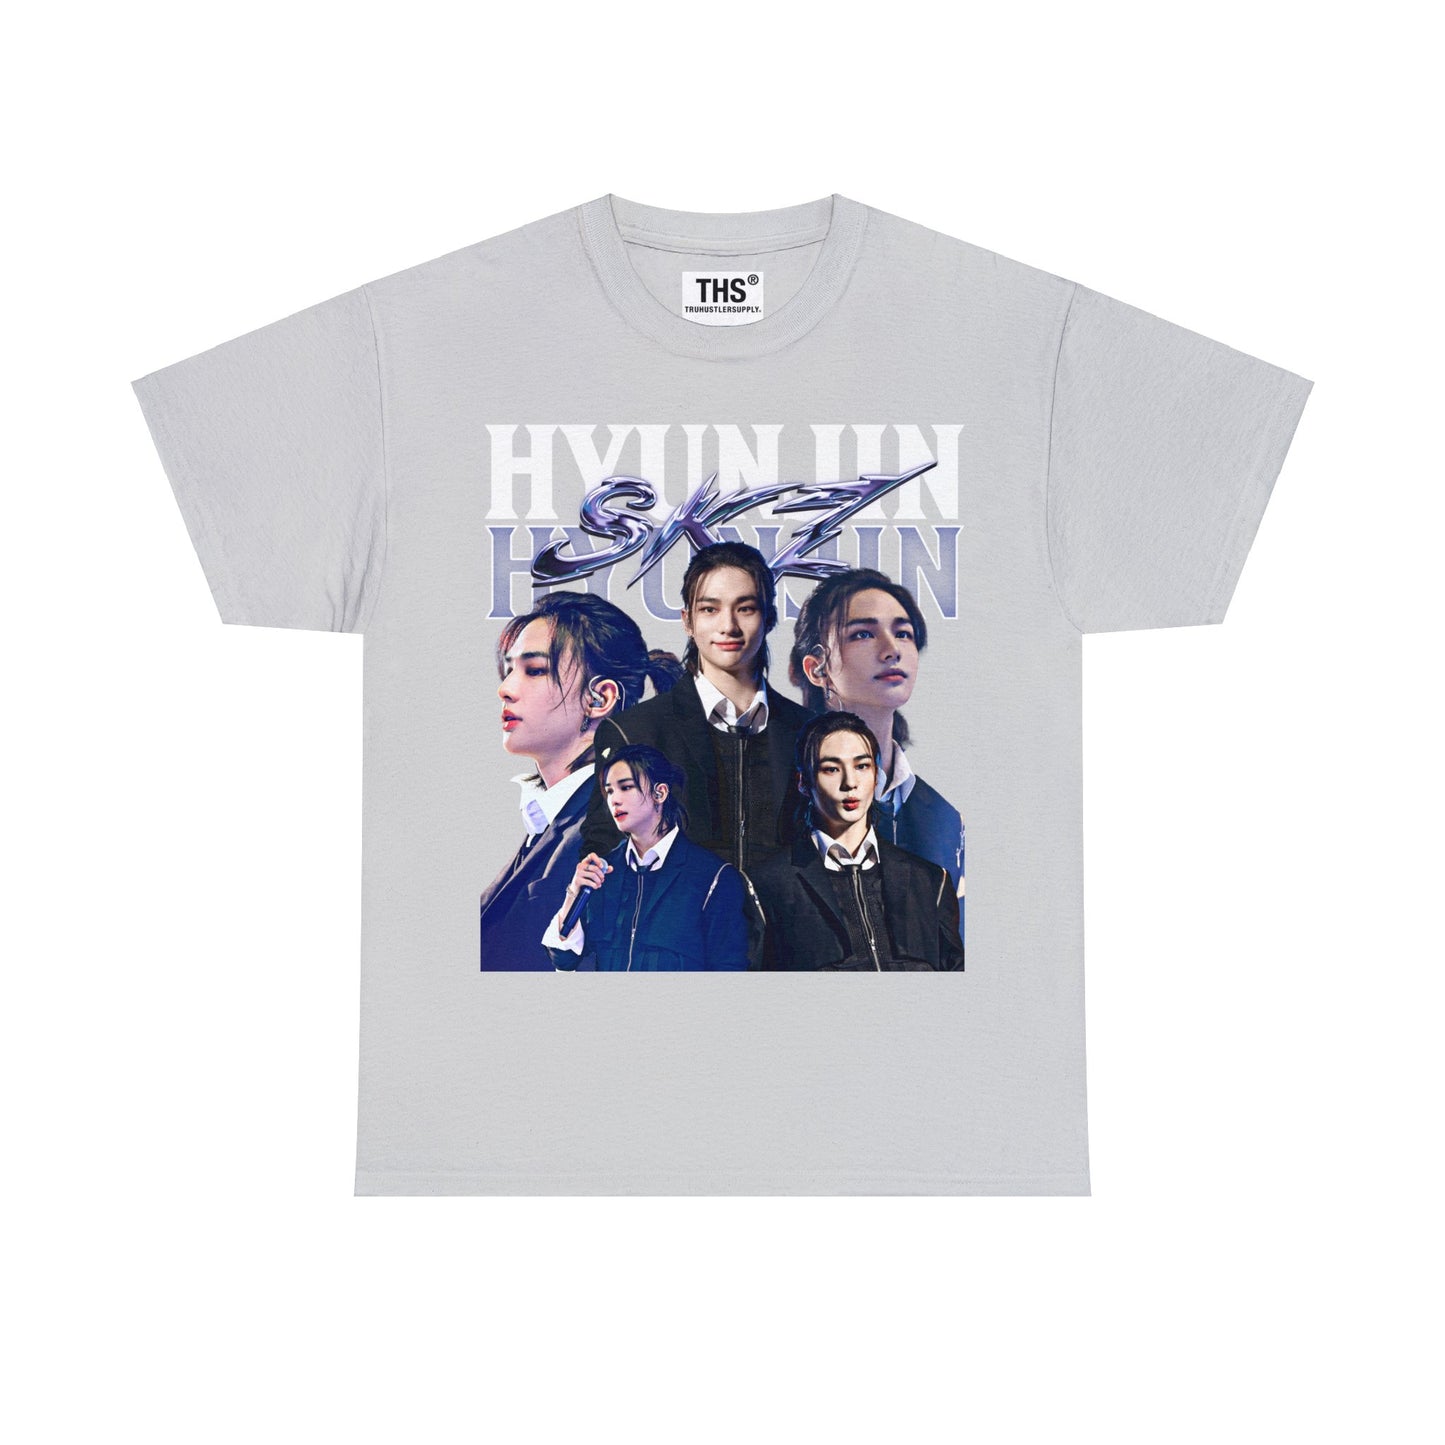 Hyunjin SKZ Bootleg Graphic T-Shirt